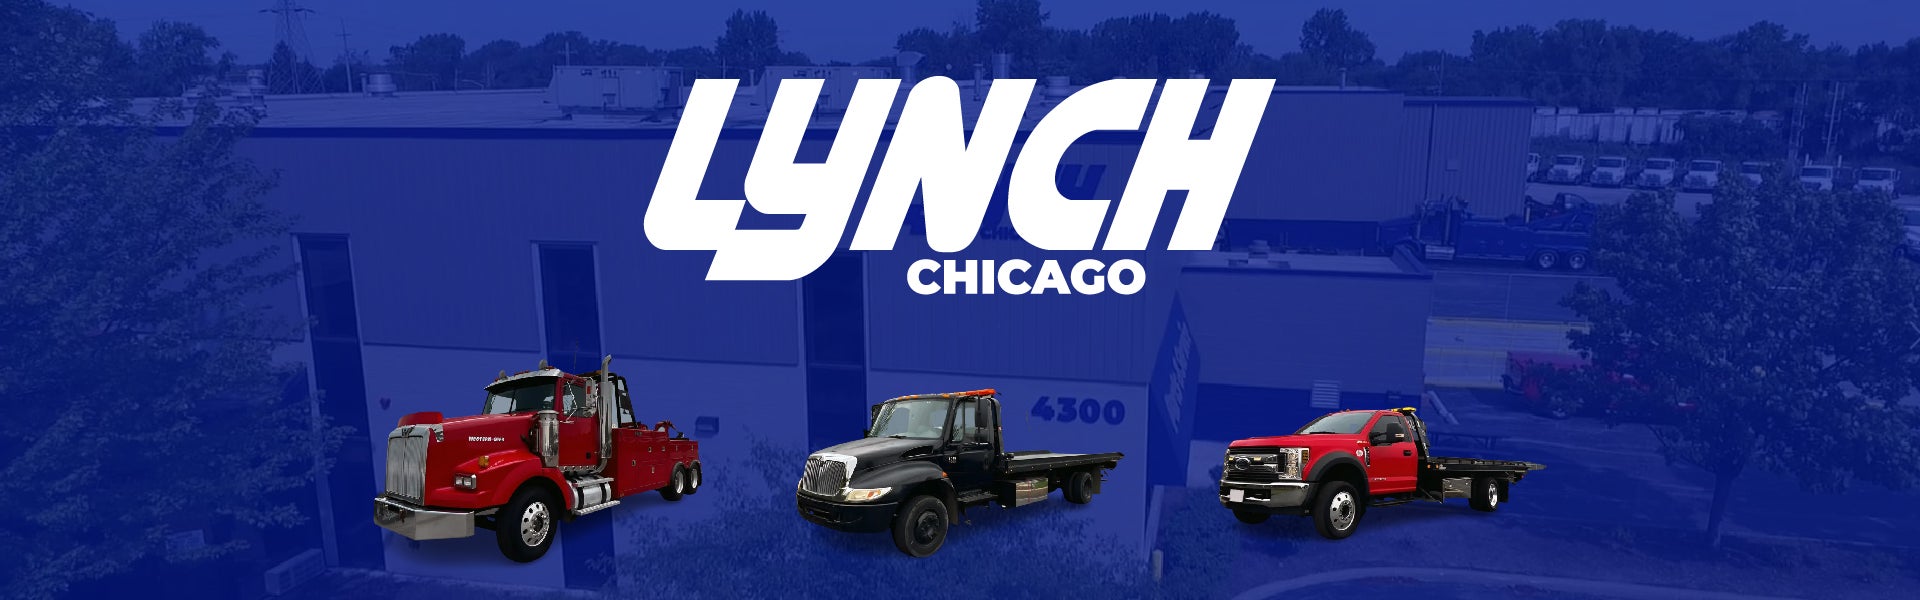 lynch chicago general slide 2